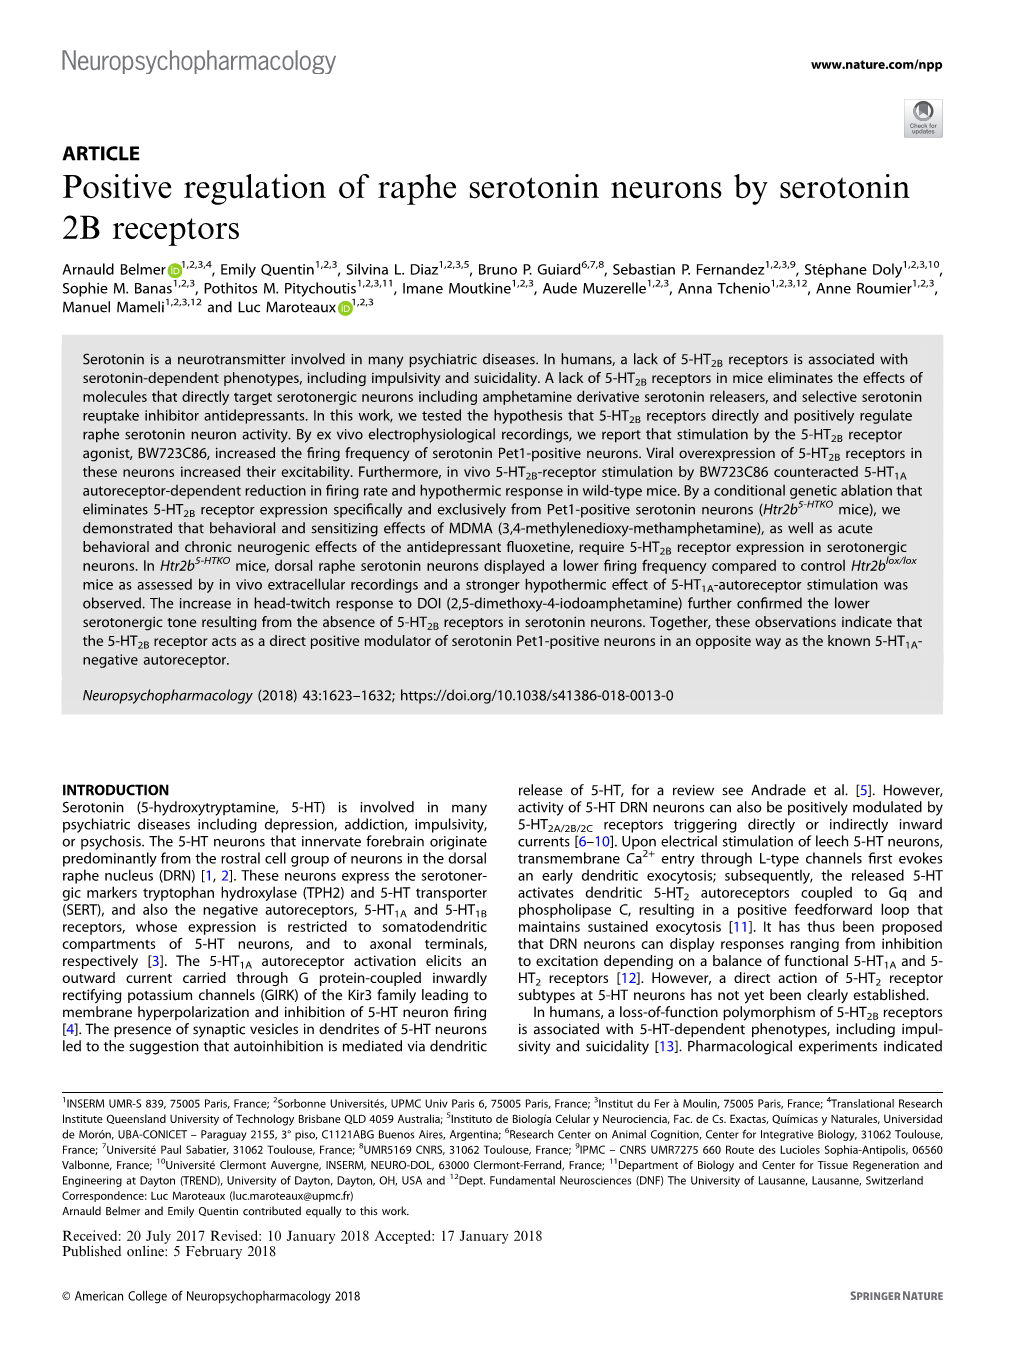 Positive Regulation of Raphe Serotonin Neurons by Serotonin 2B Receptors